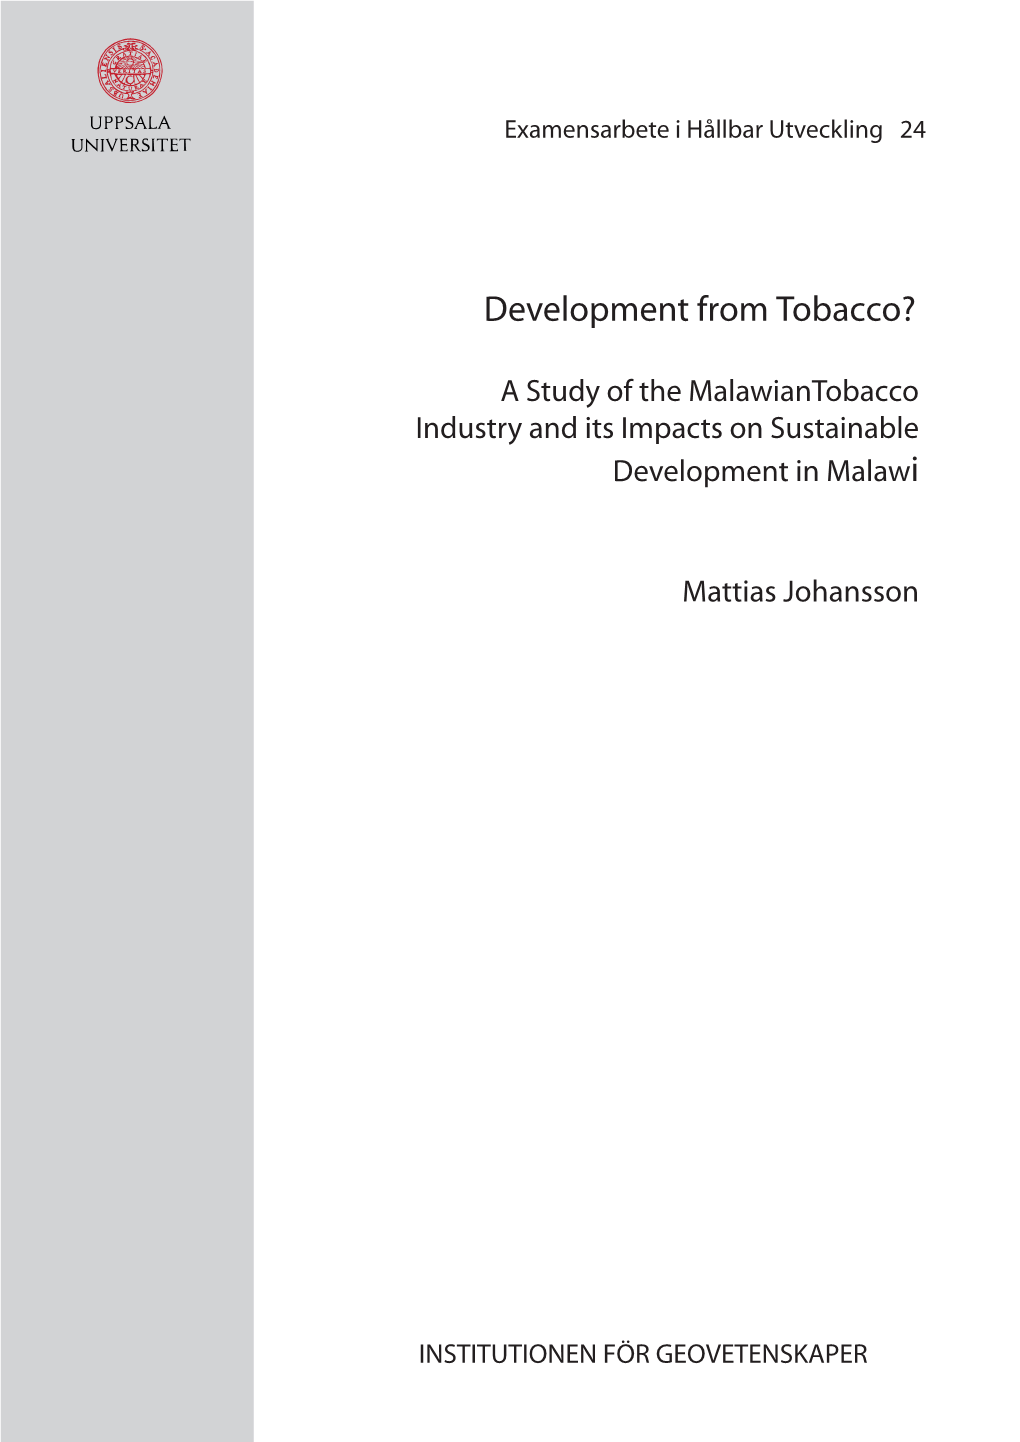 Development from Tobacco?